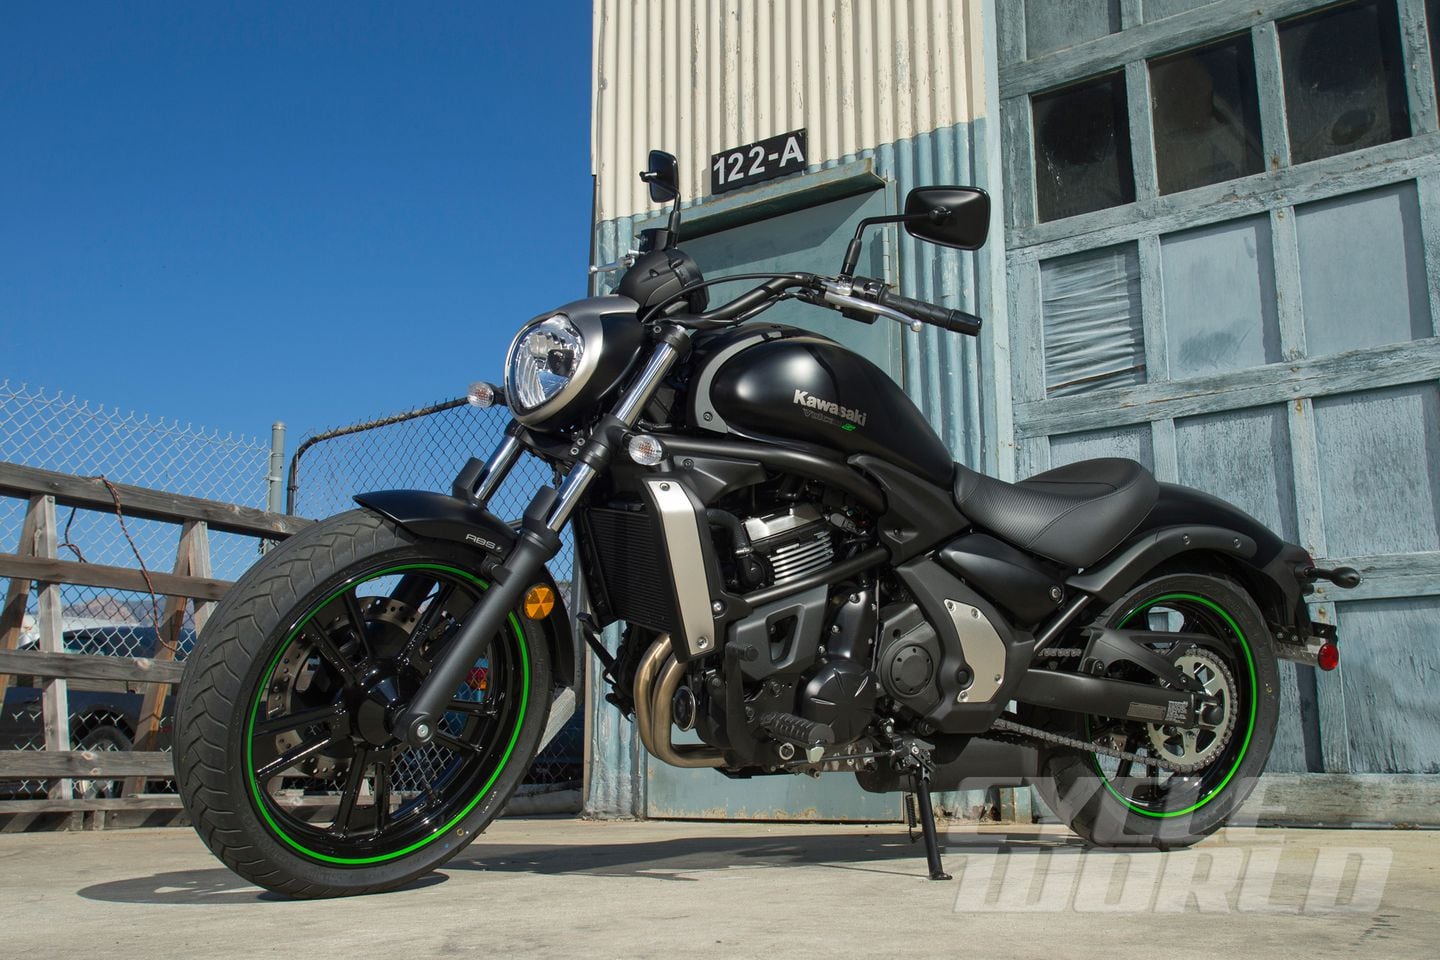 2015 Kawasaki Vulcan S First Cruiser Motorcycle Review- Photos- Specs | Cycle World